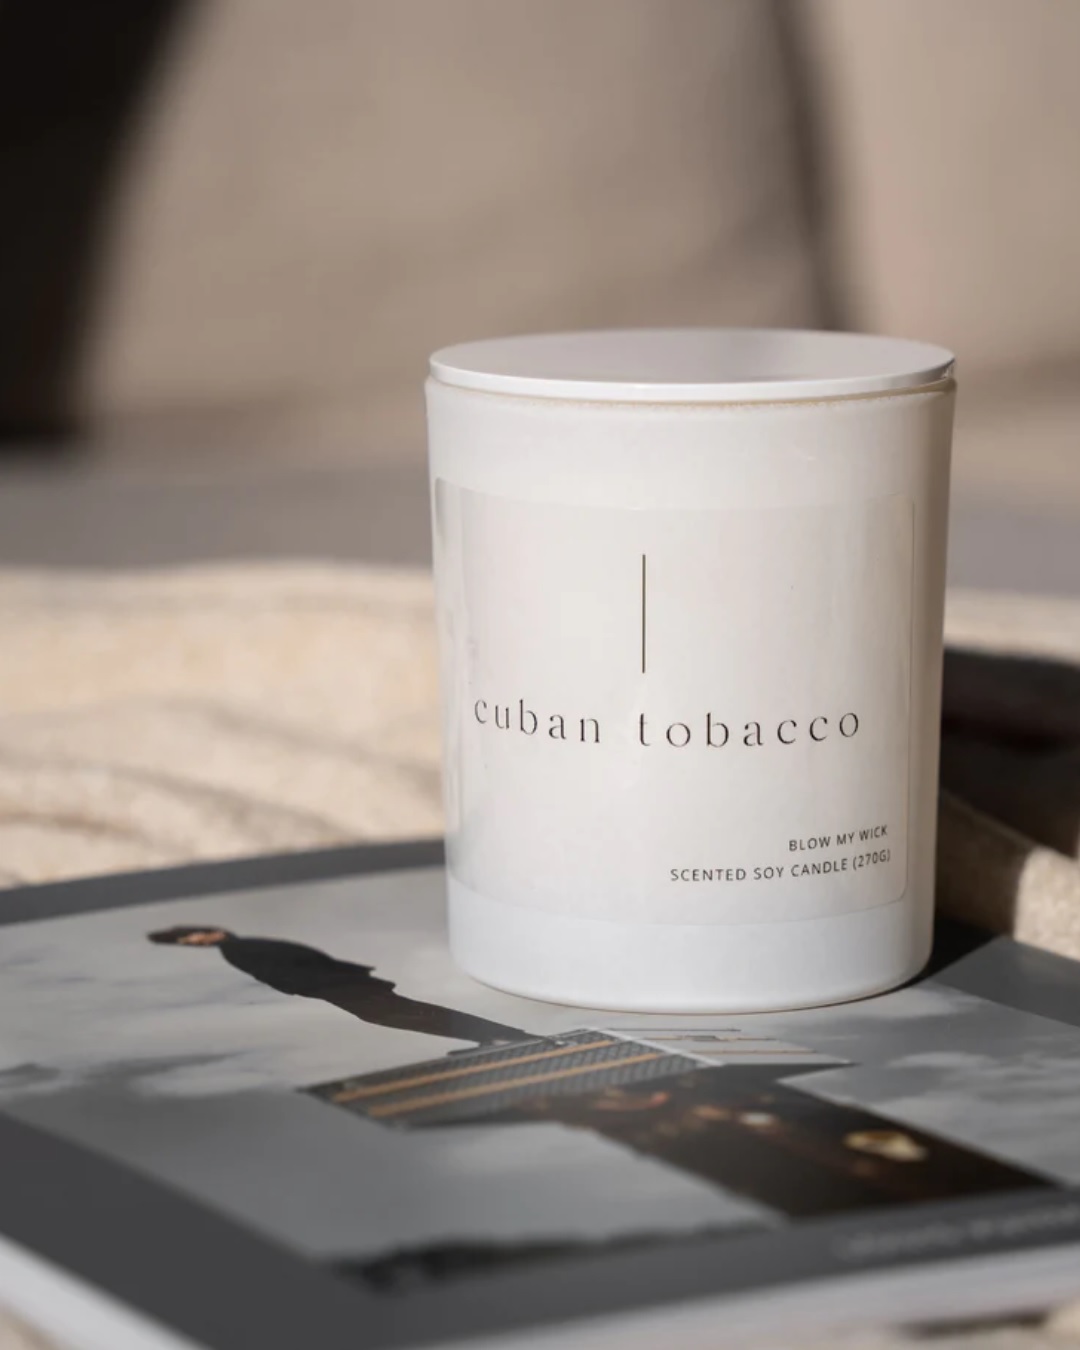 Cuban tobacco candle